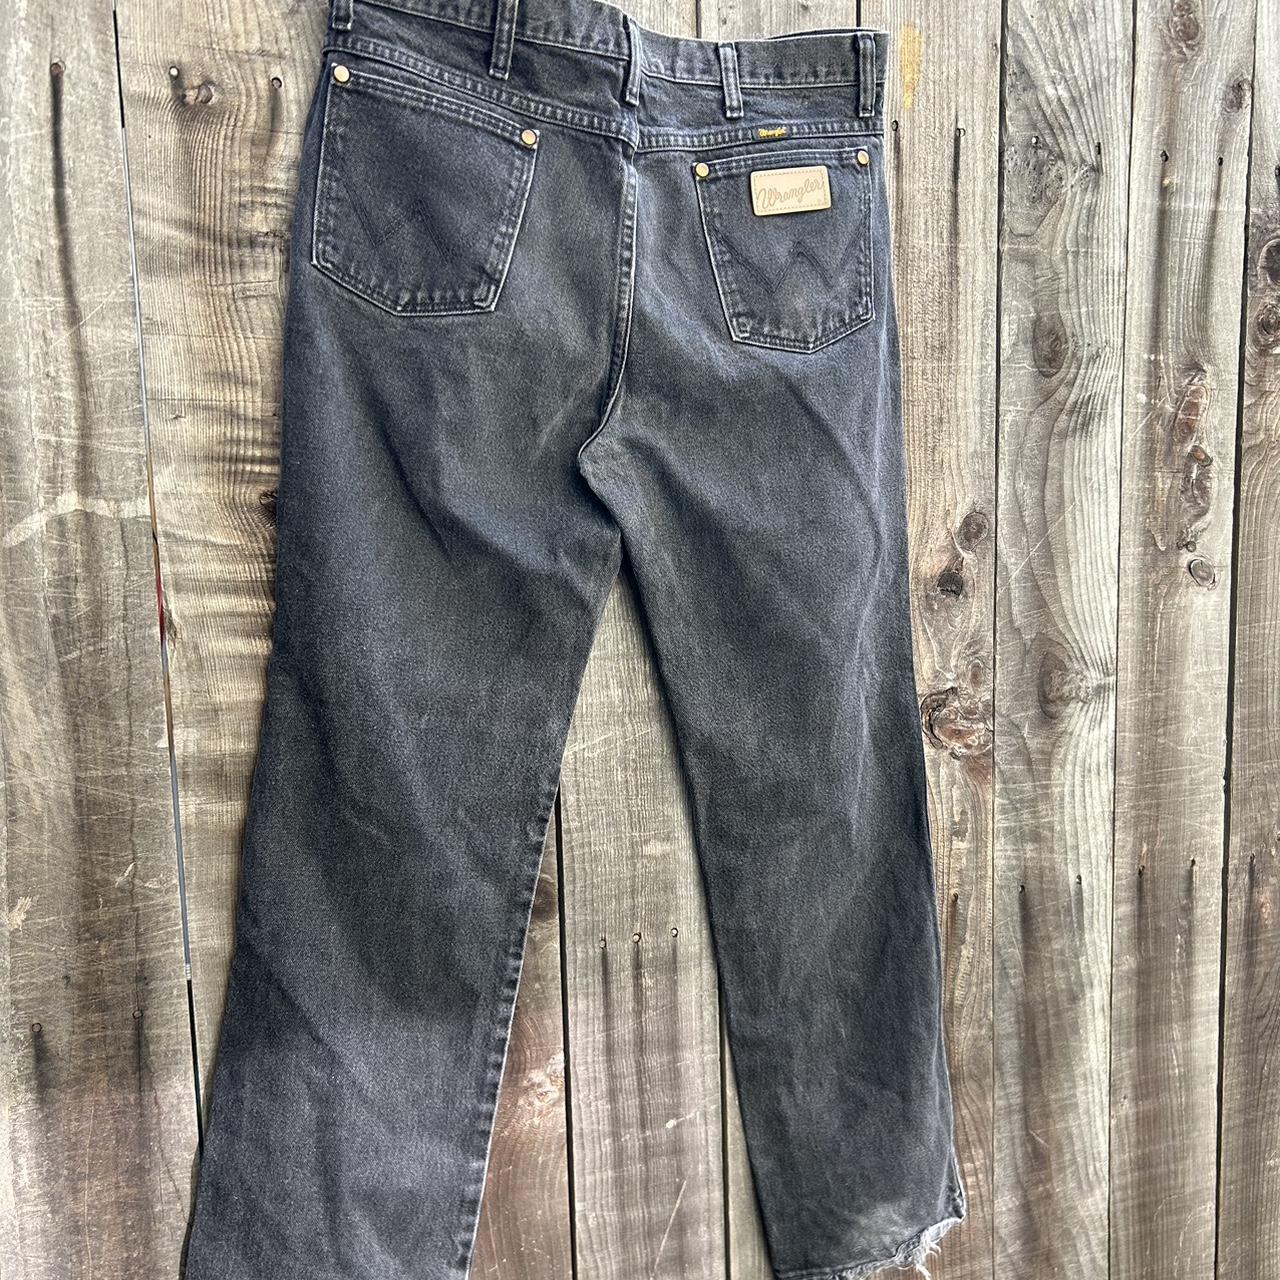 Faded Black Wrangler Jeans - Depop